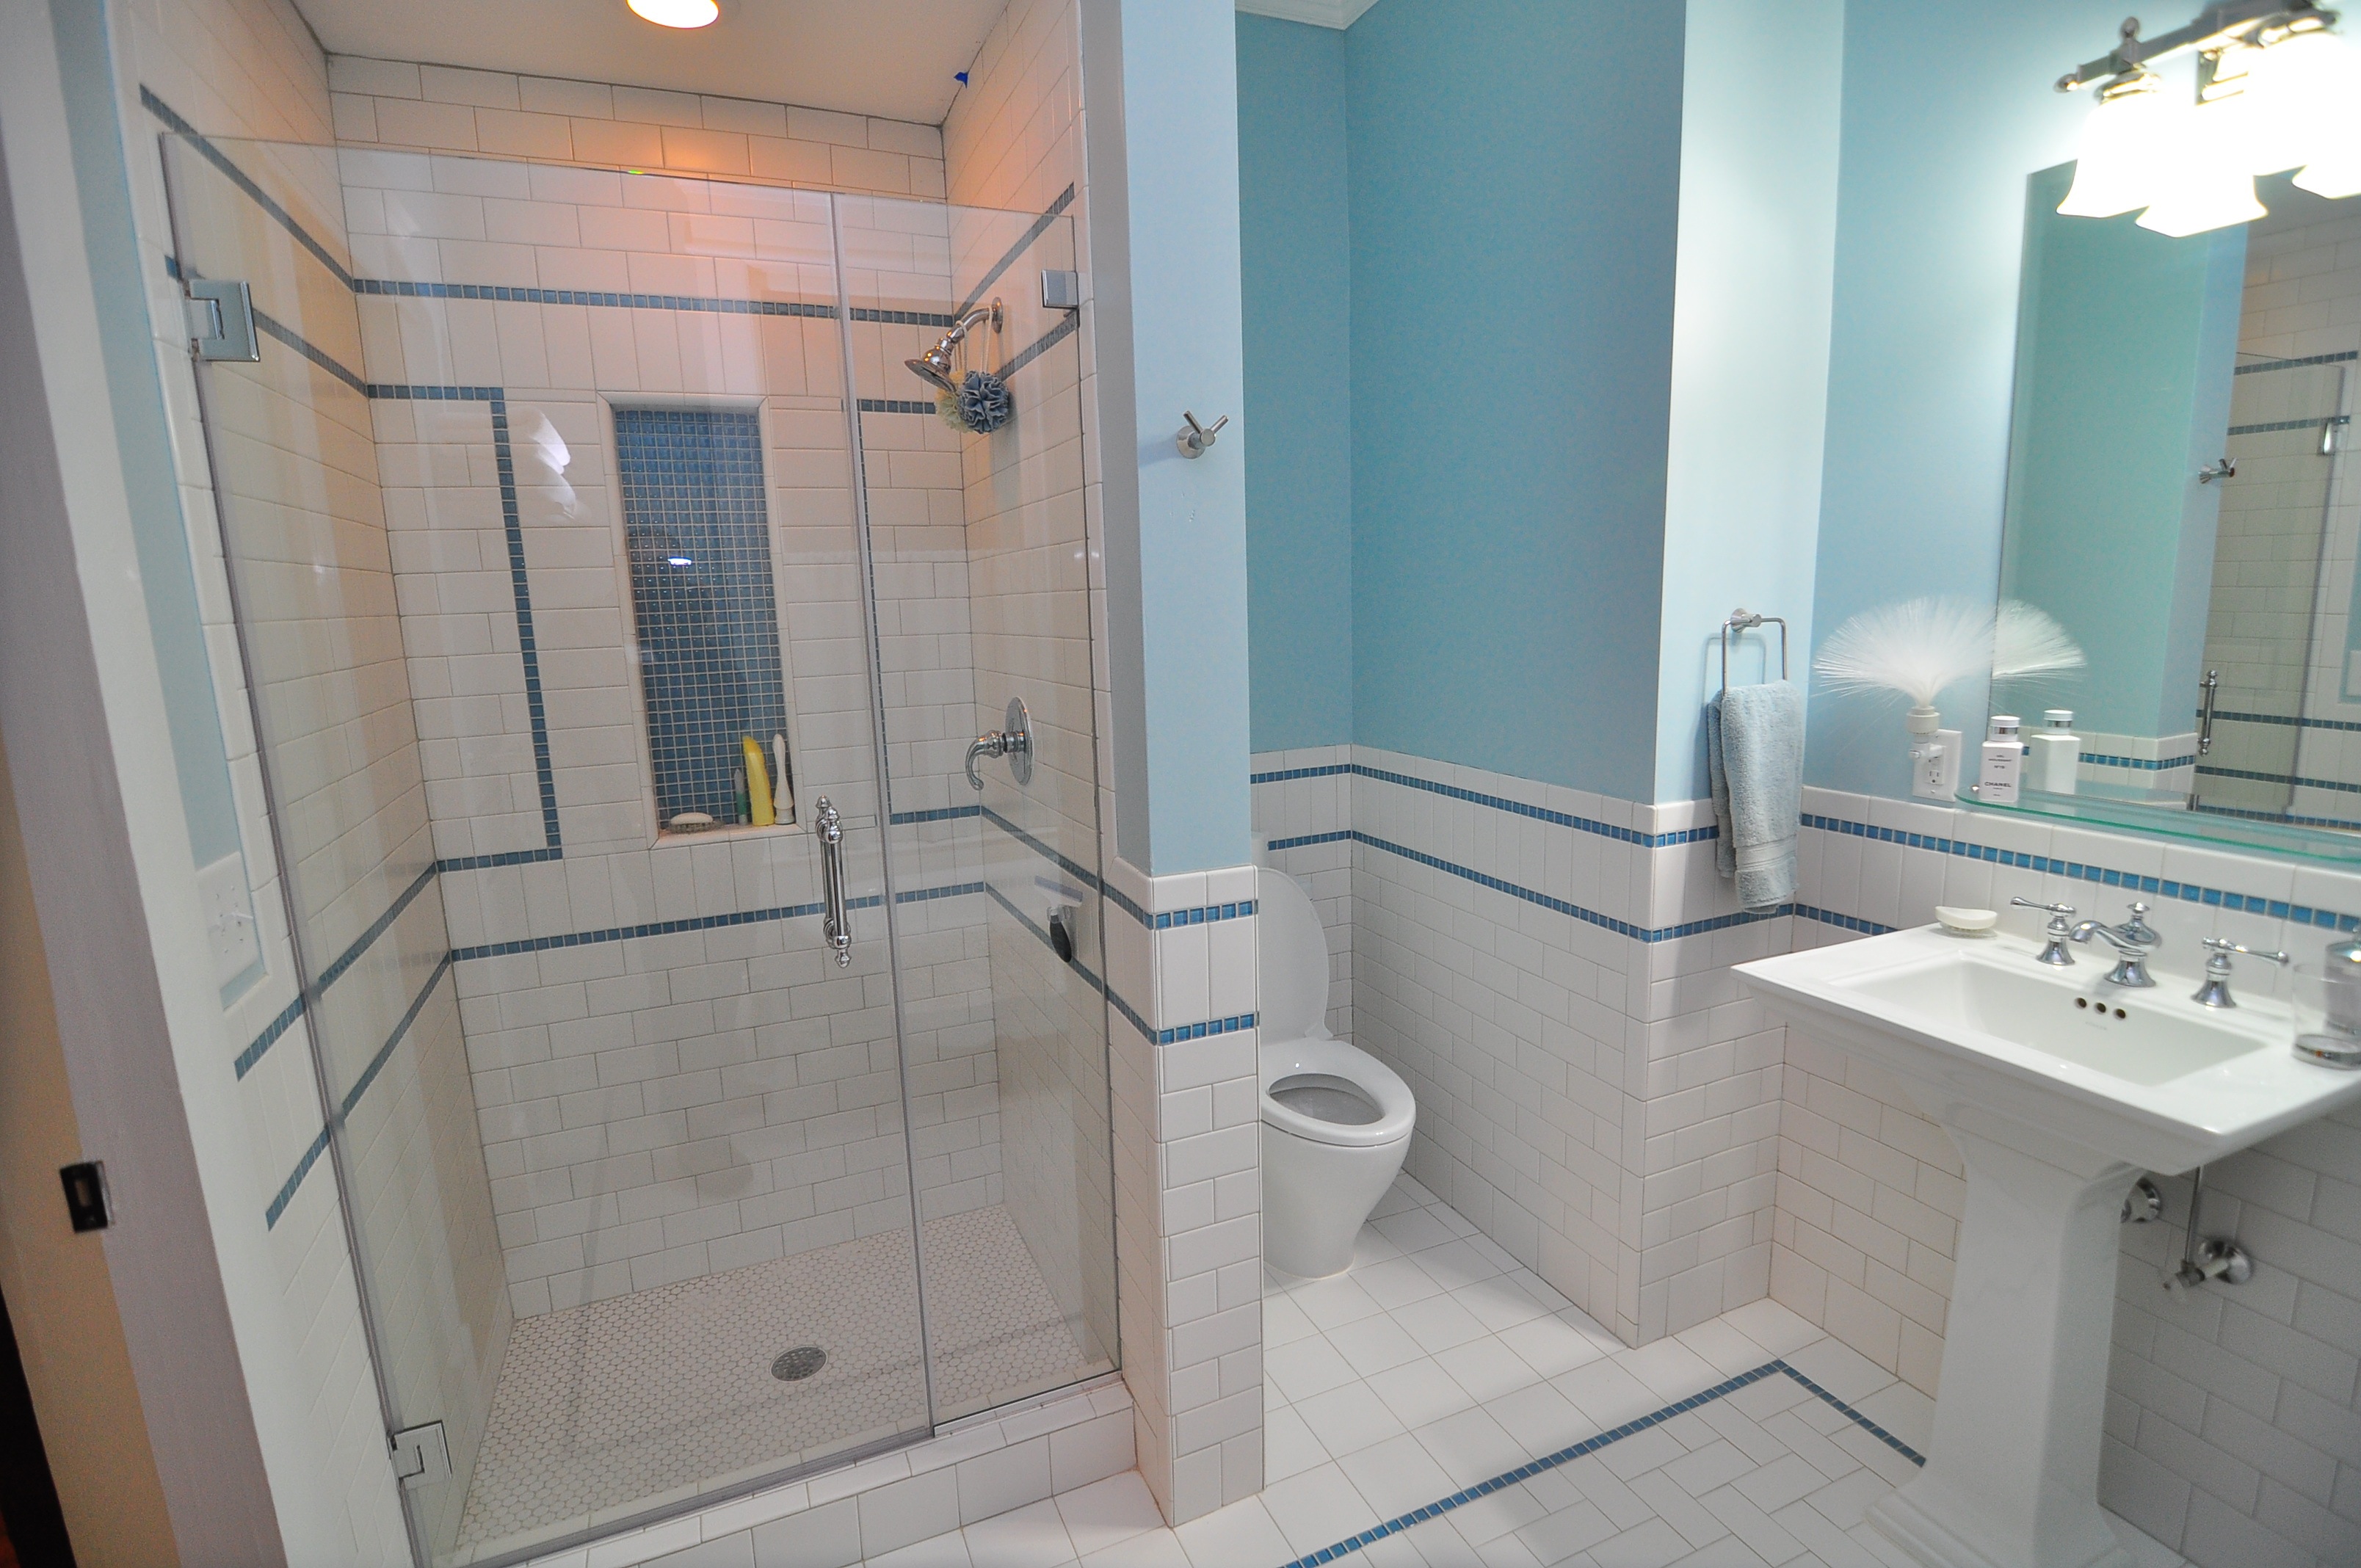 bathroom-subway-tile-twentyeleven-ways-vintage-bathroom-tile-patterns-ideas